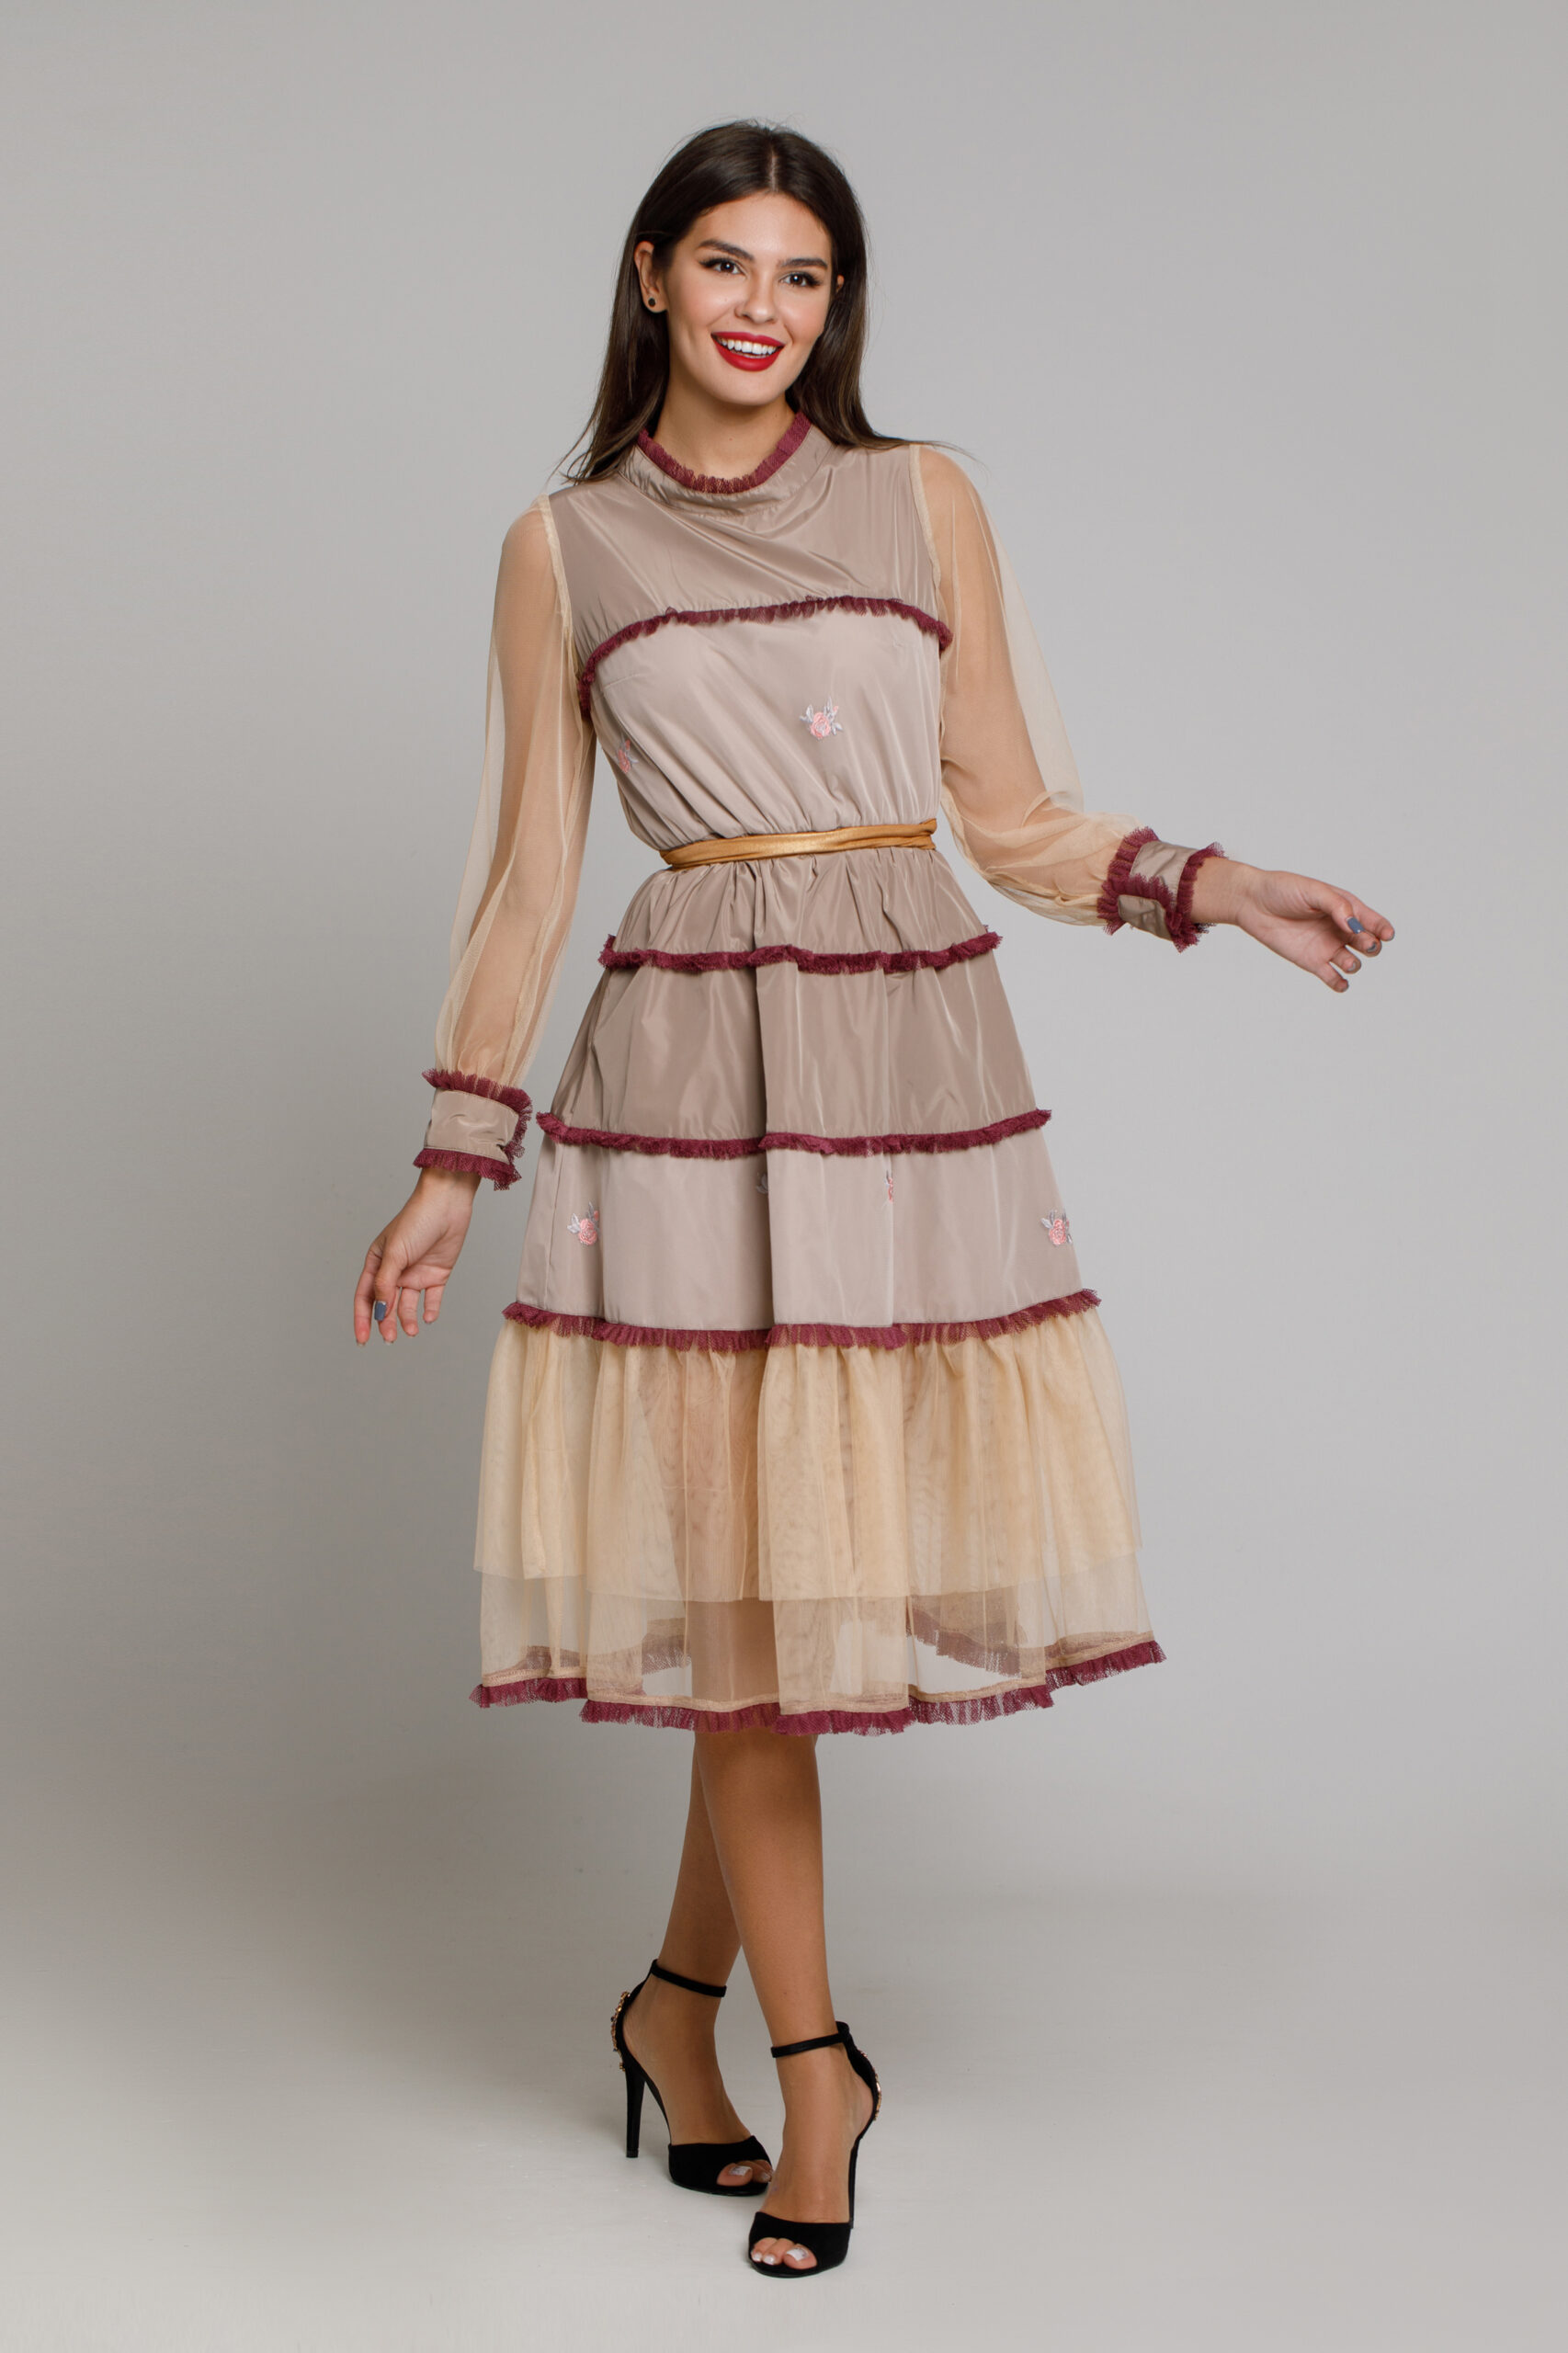 RUNA cream embroidered tulle dress. Natural fabrics, original design, handmade embroidery